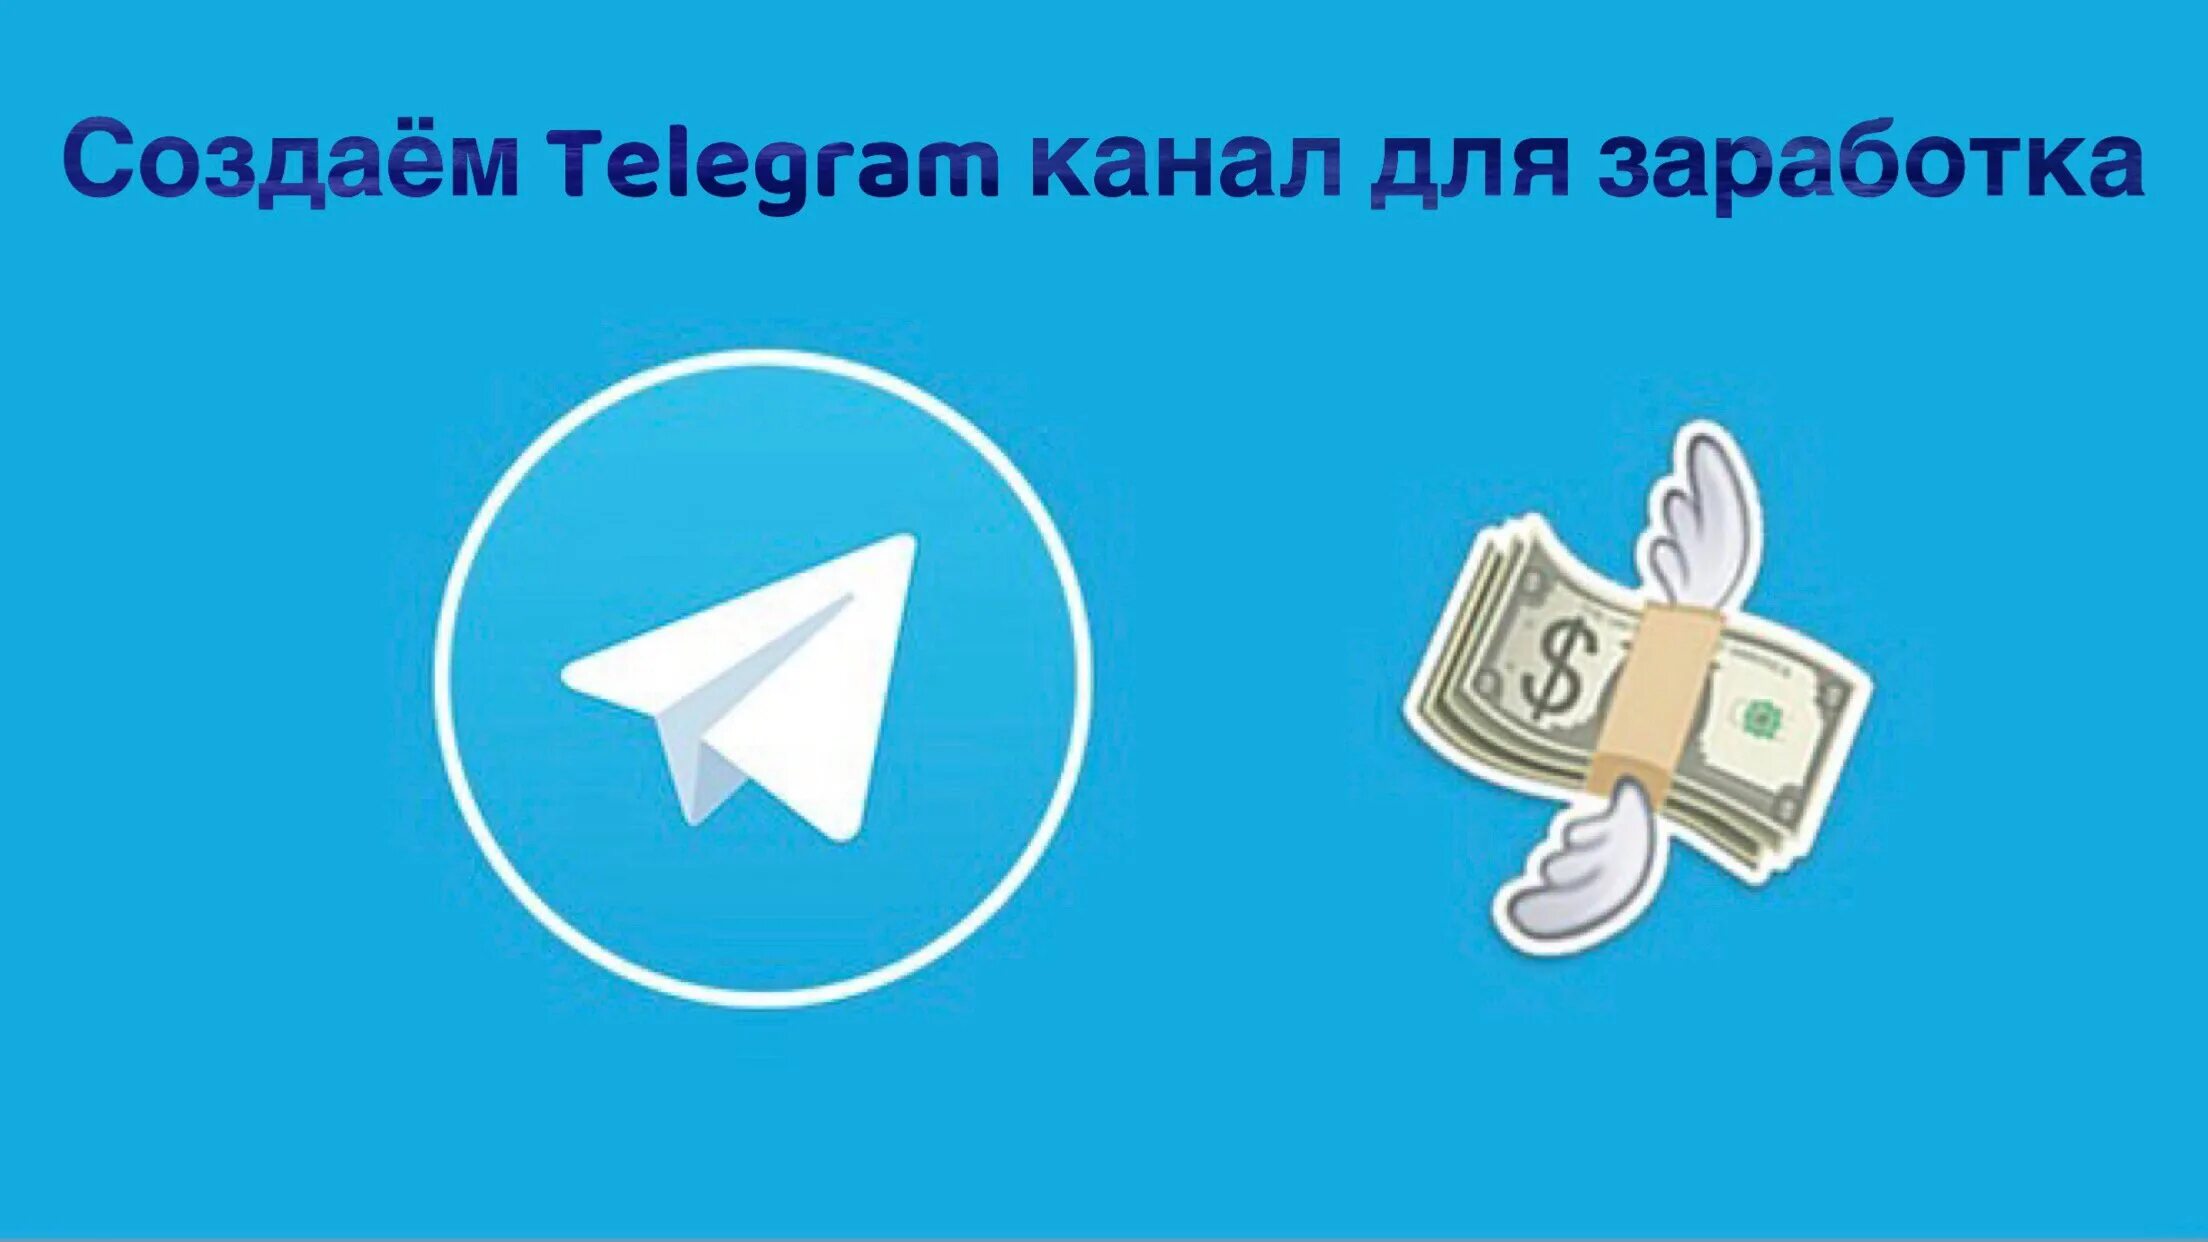 Телеграмм. Телеграмм бизнес. Продвижение в телеграм. Телеграм деньги.